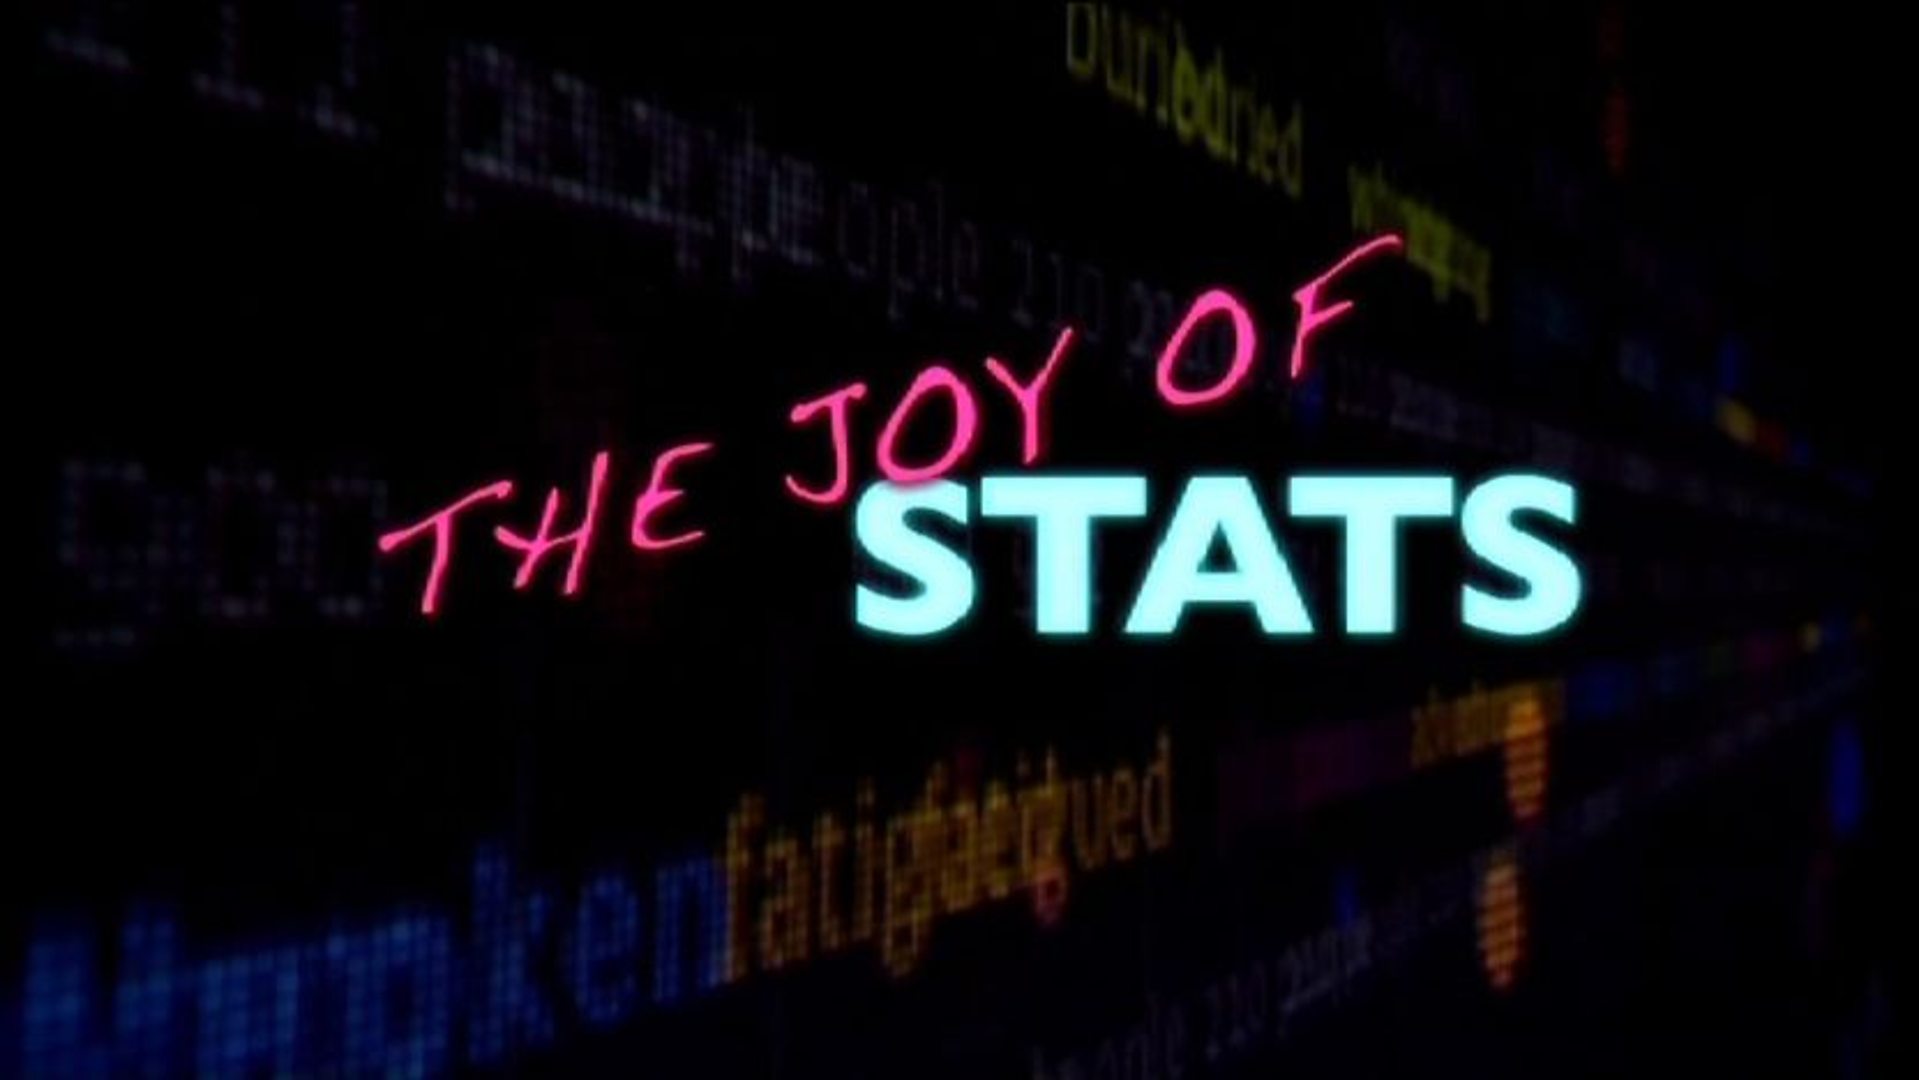 FreeDoc #1 — The joy of stats